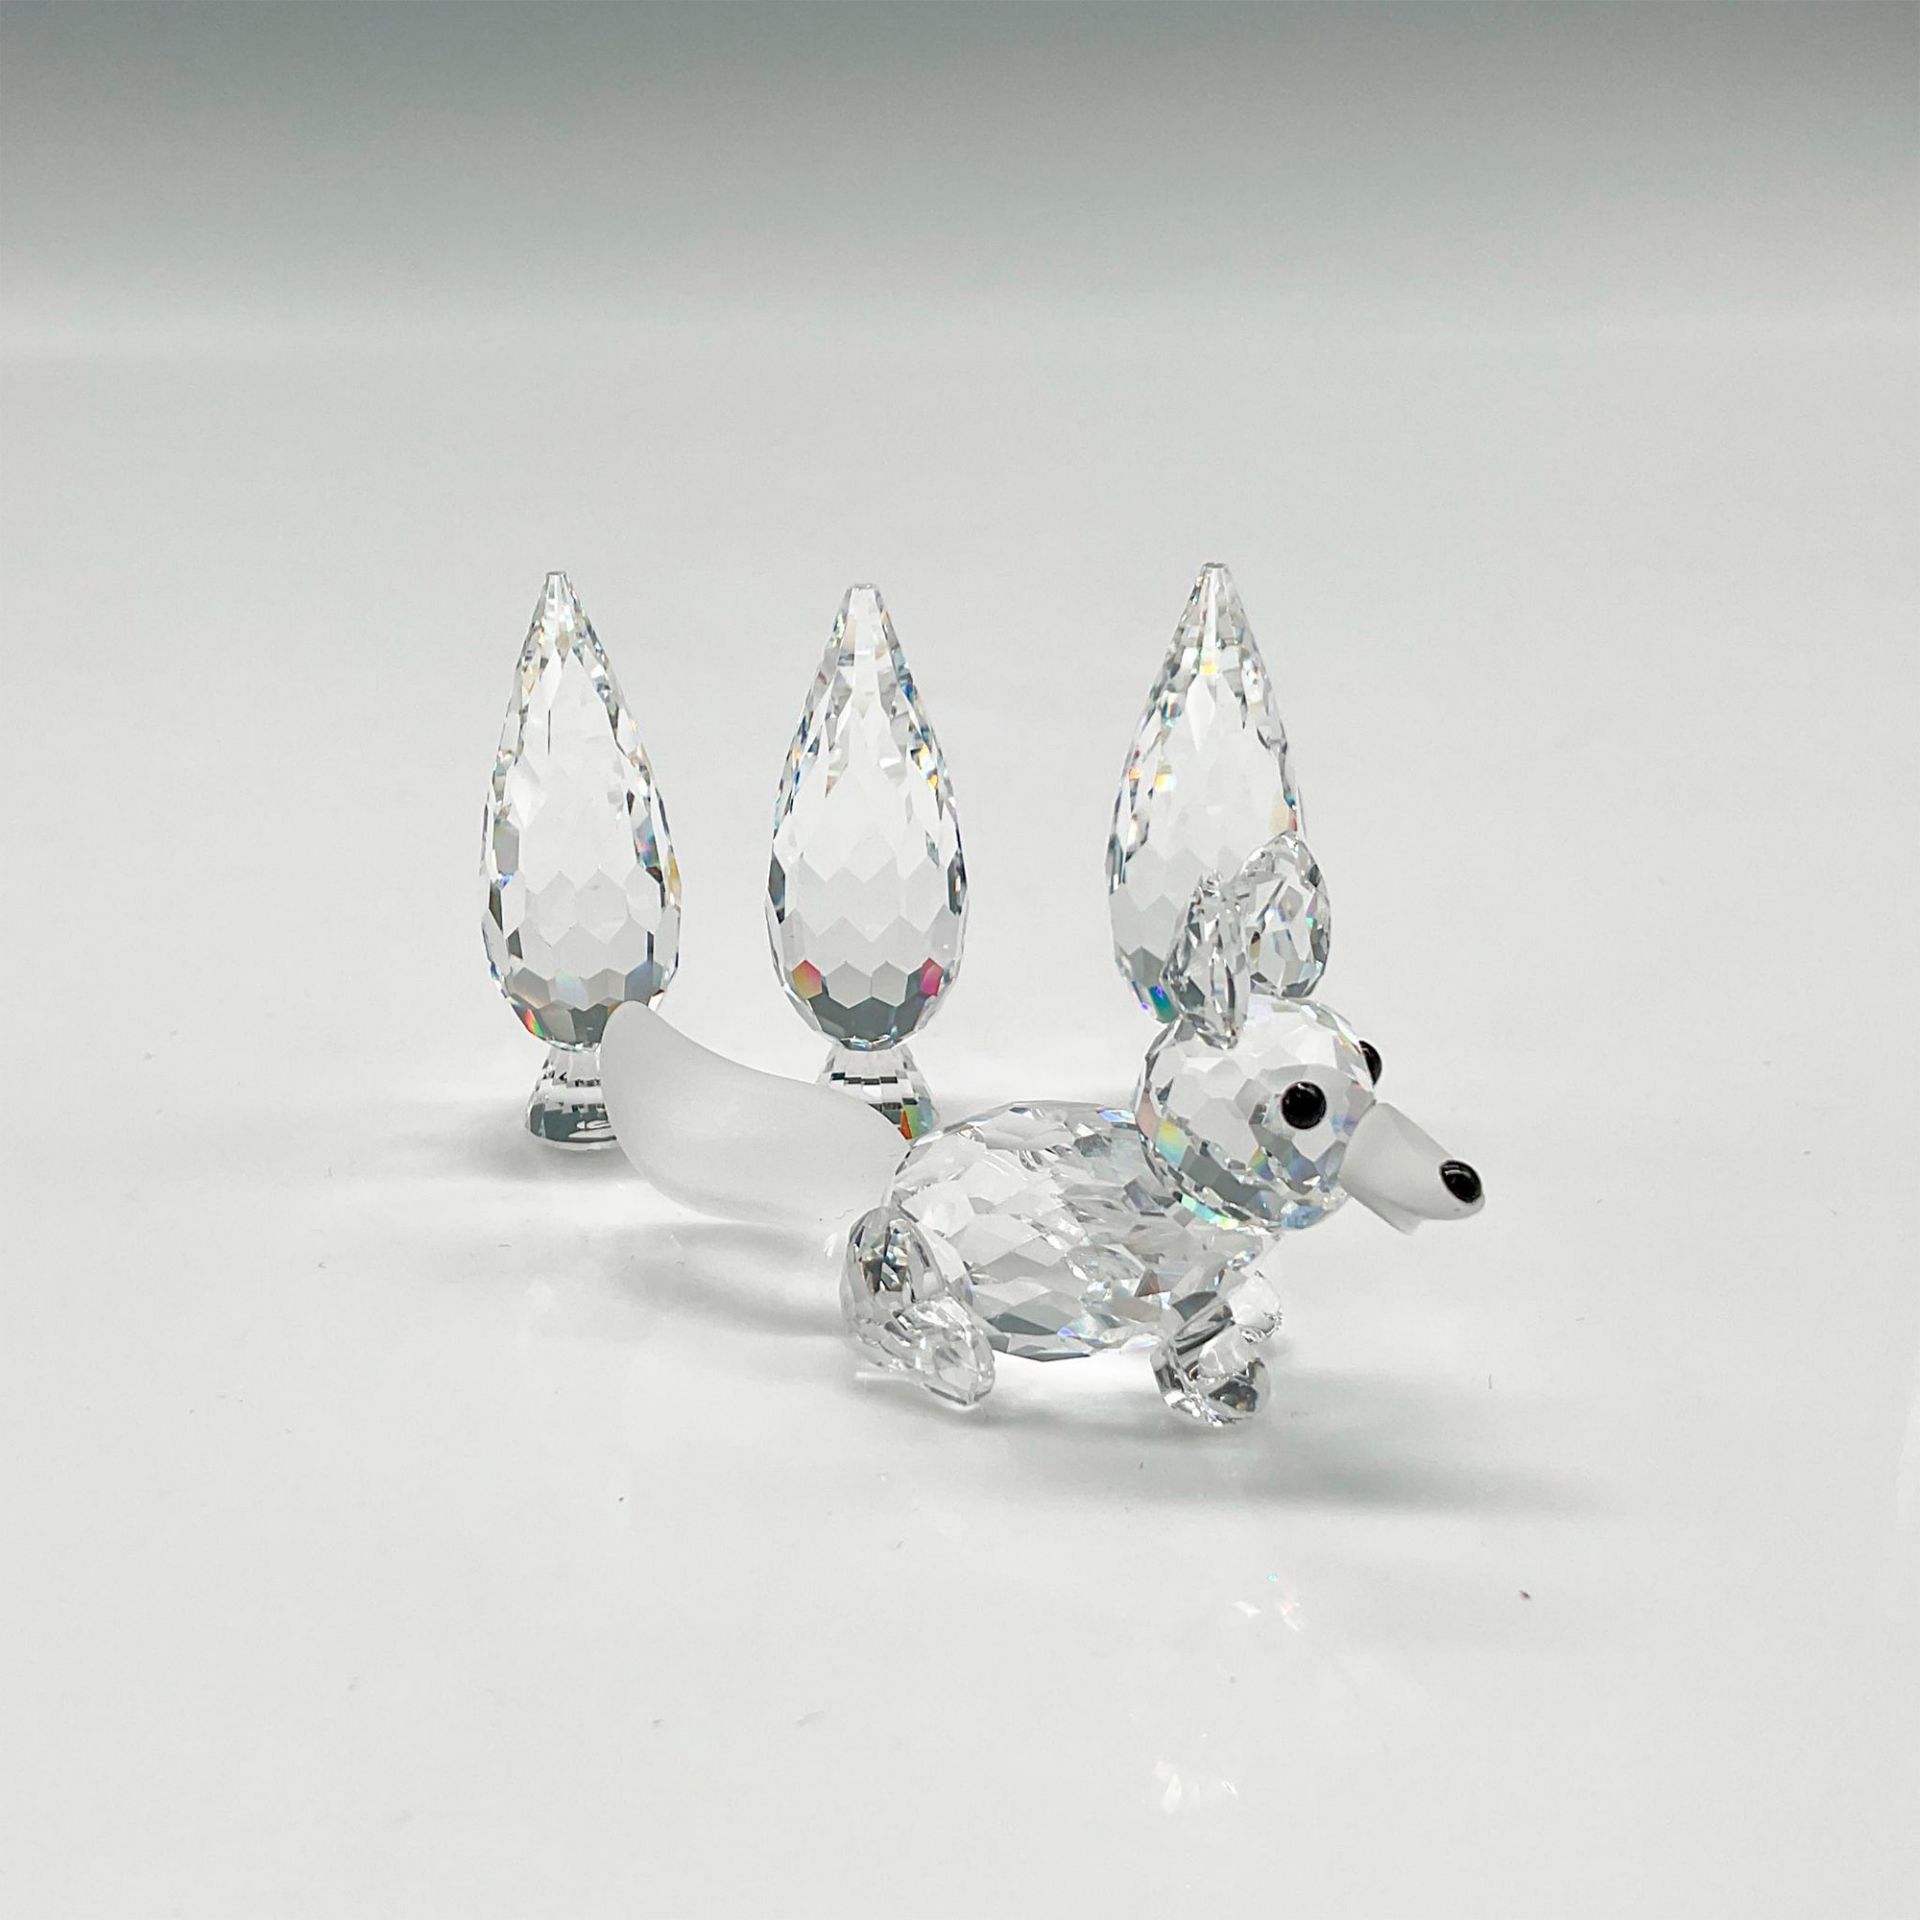 Swarovski Silver Crystal Figurines, Fox + Poplar Trees - Image 2 of 4